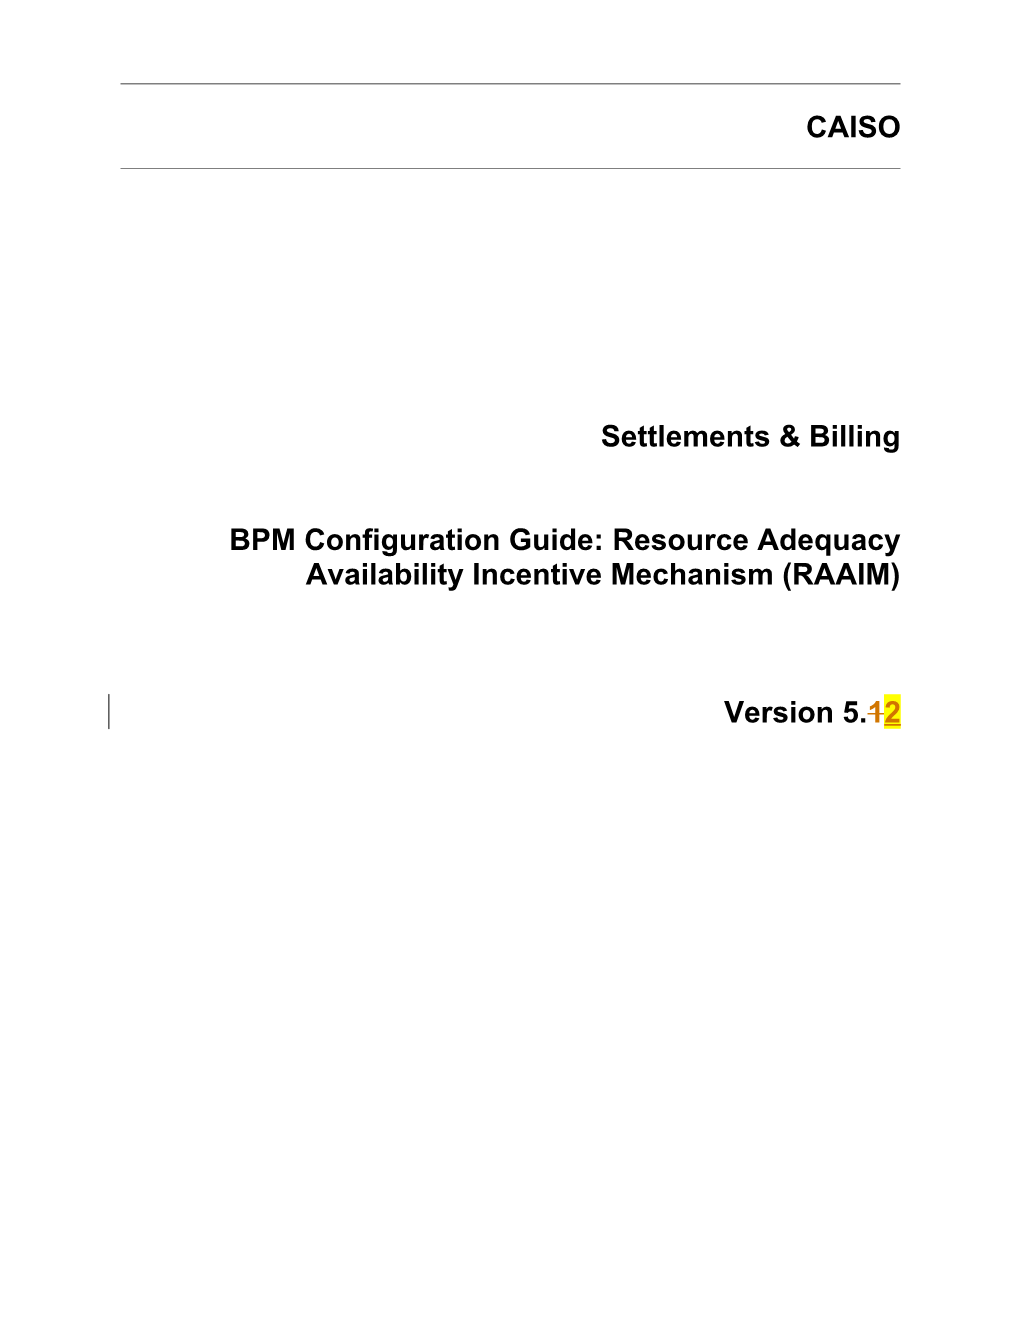 BPM - CG PC RA Availability Incentive Mechanism